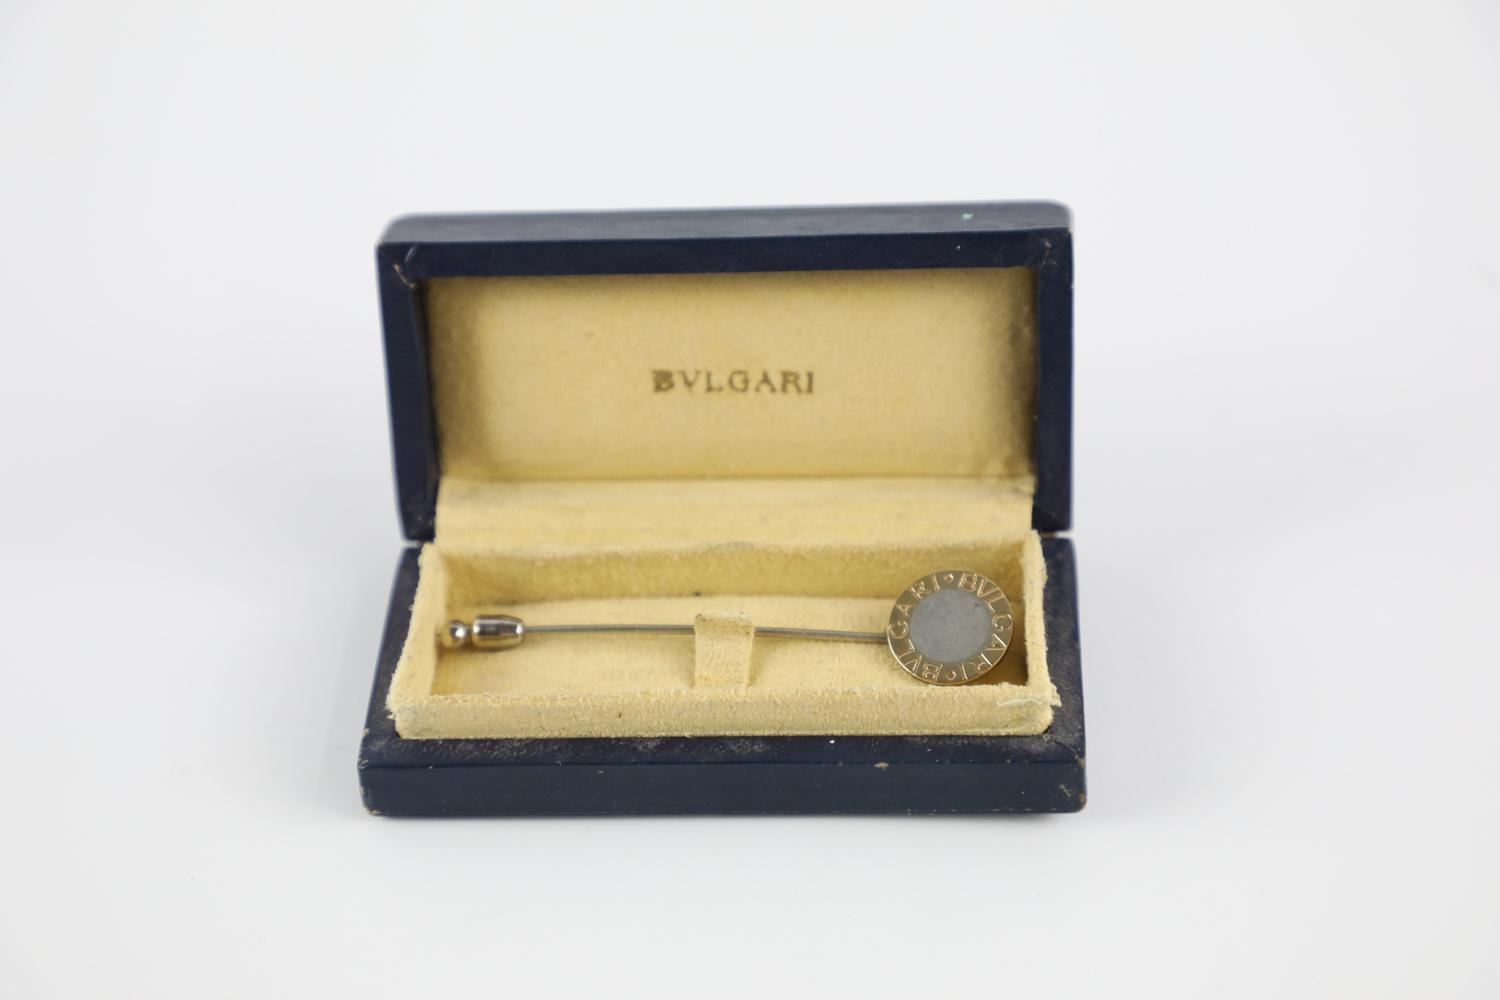 Vintage Bvlgari sterling silver & 18ct gold stick pin brooch in original box